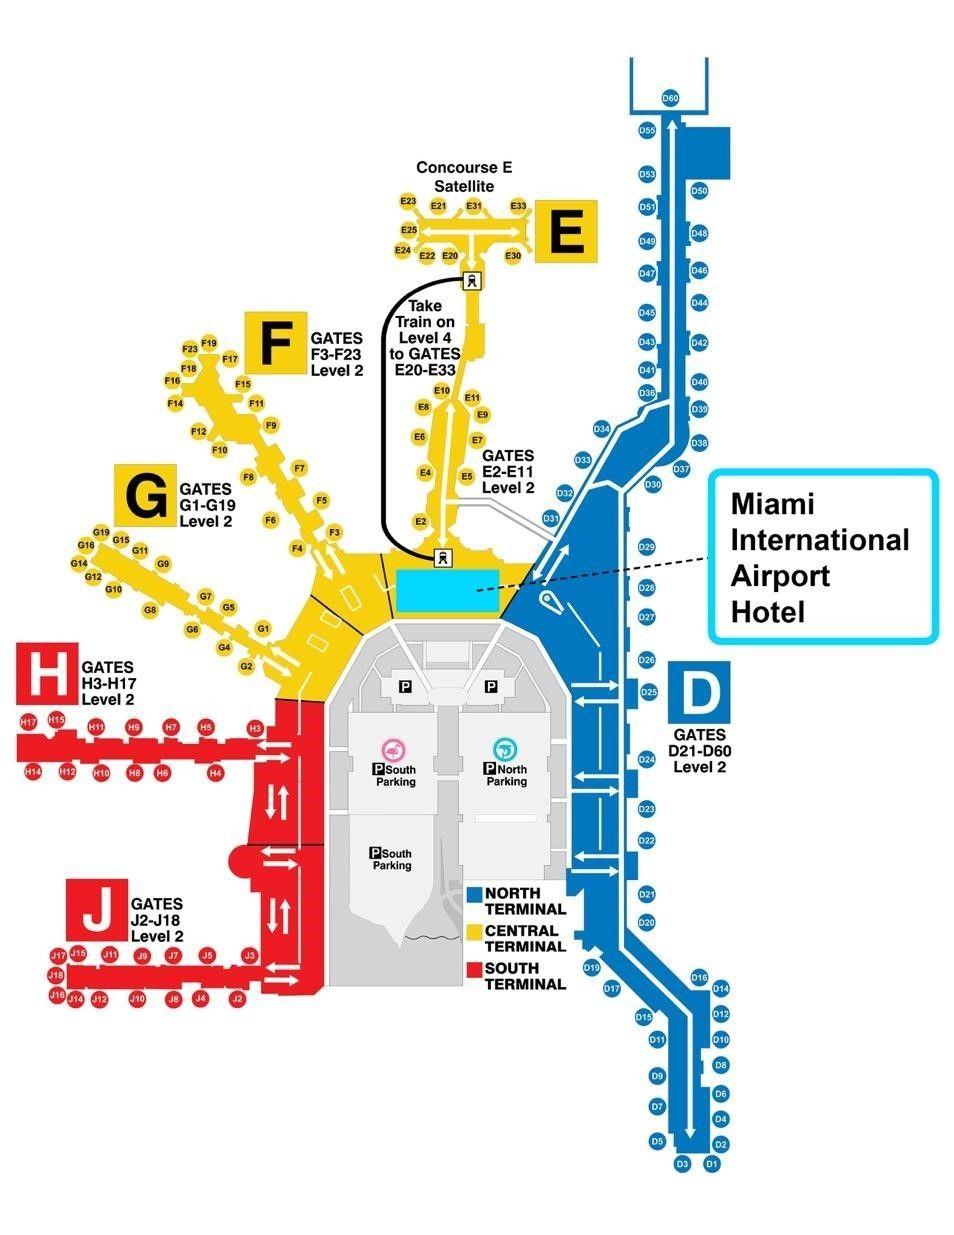 Miami International Airport Logo - MCR is Now Managing the Miami International Airport Hotel. Business